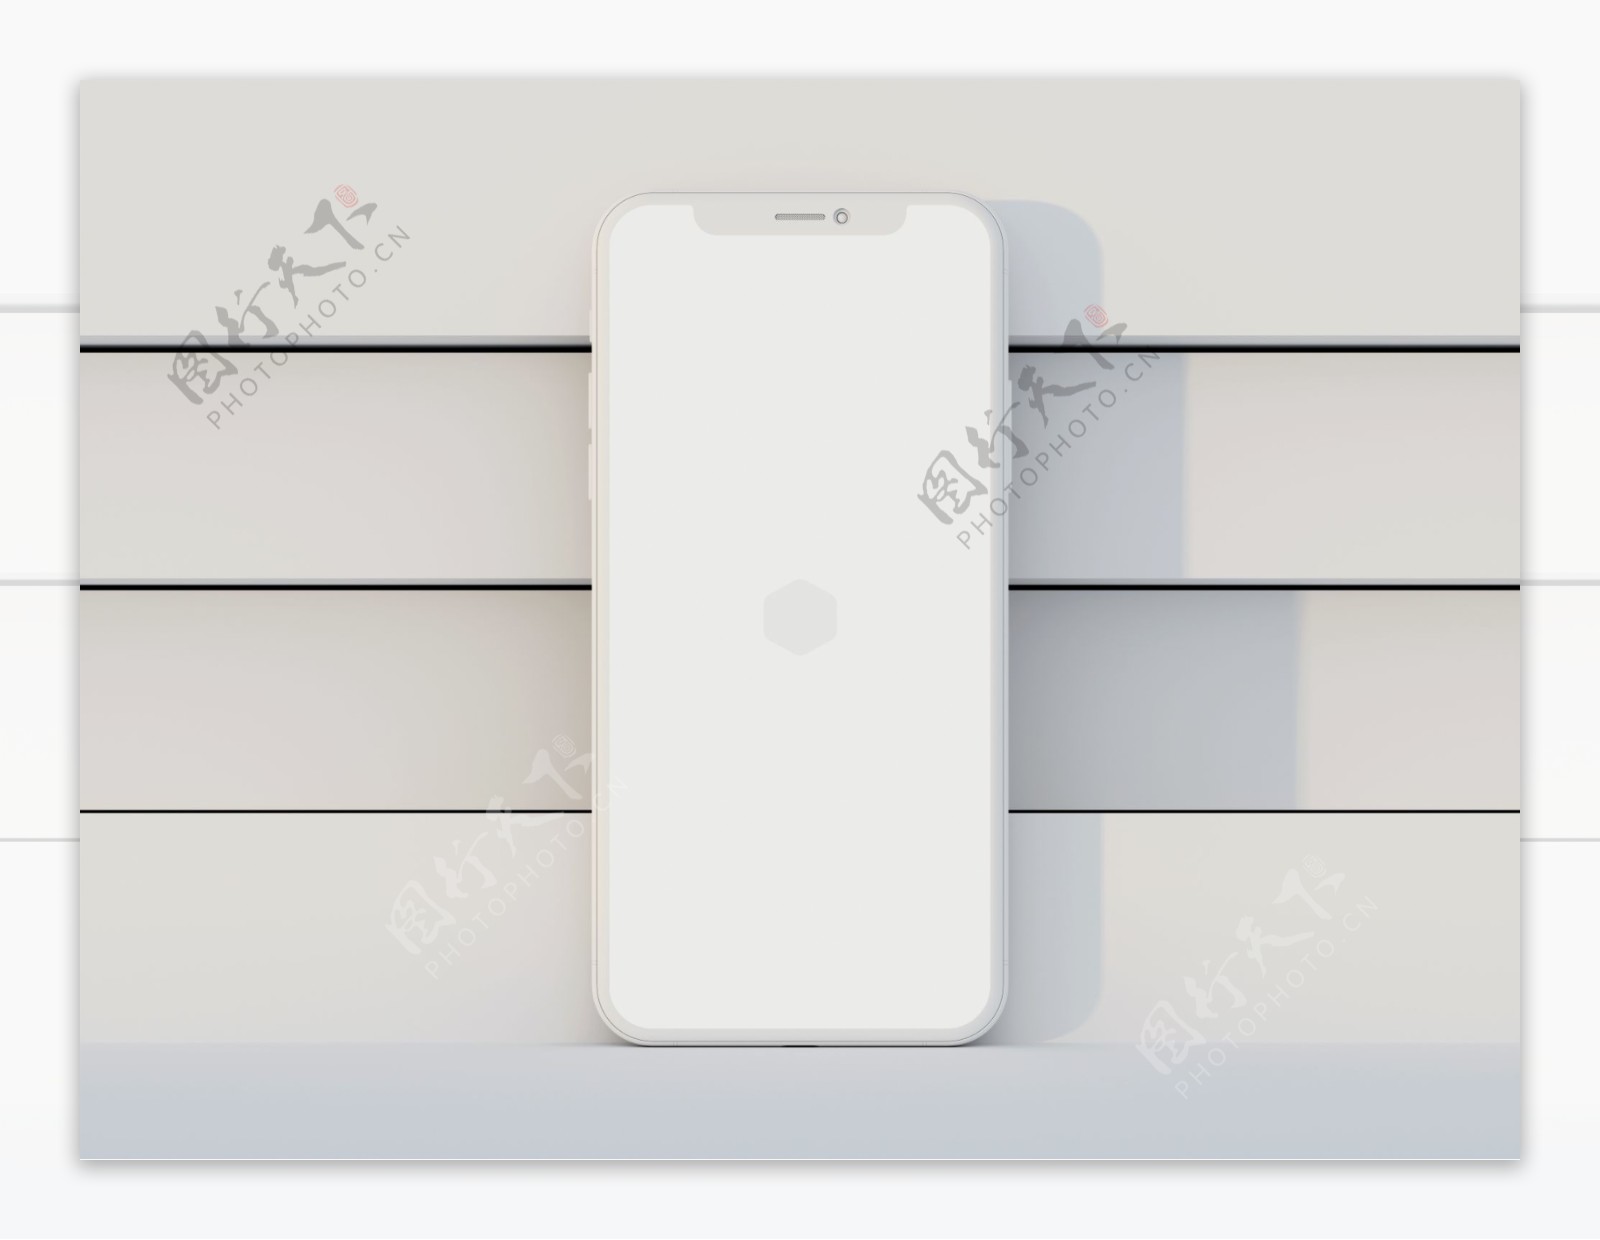 iPhoneX苹果手机白膜UI样机